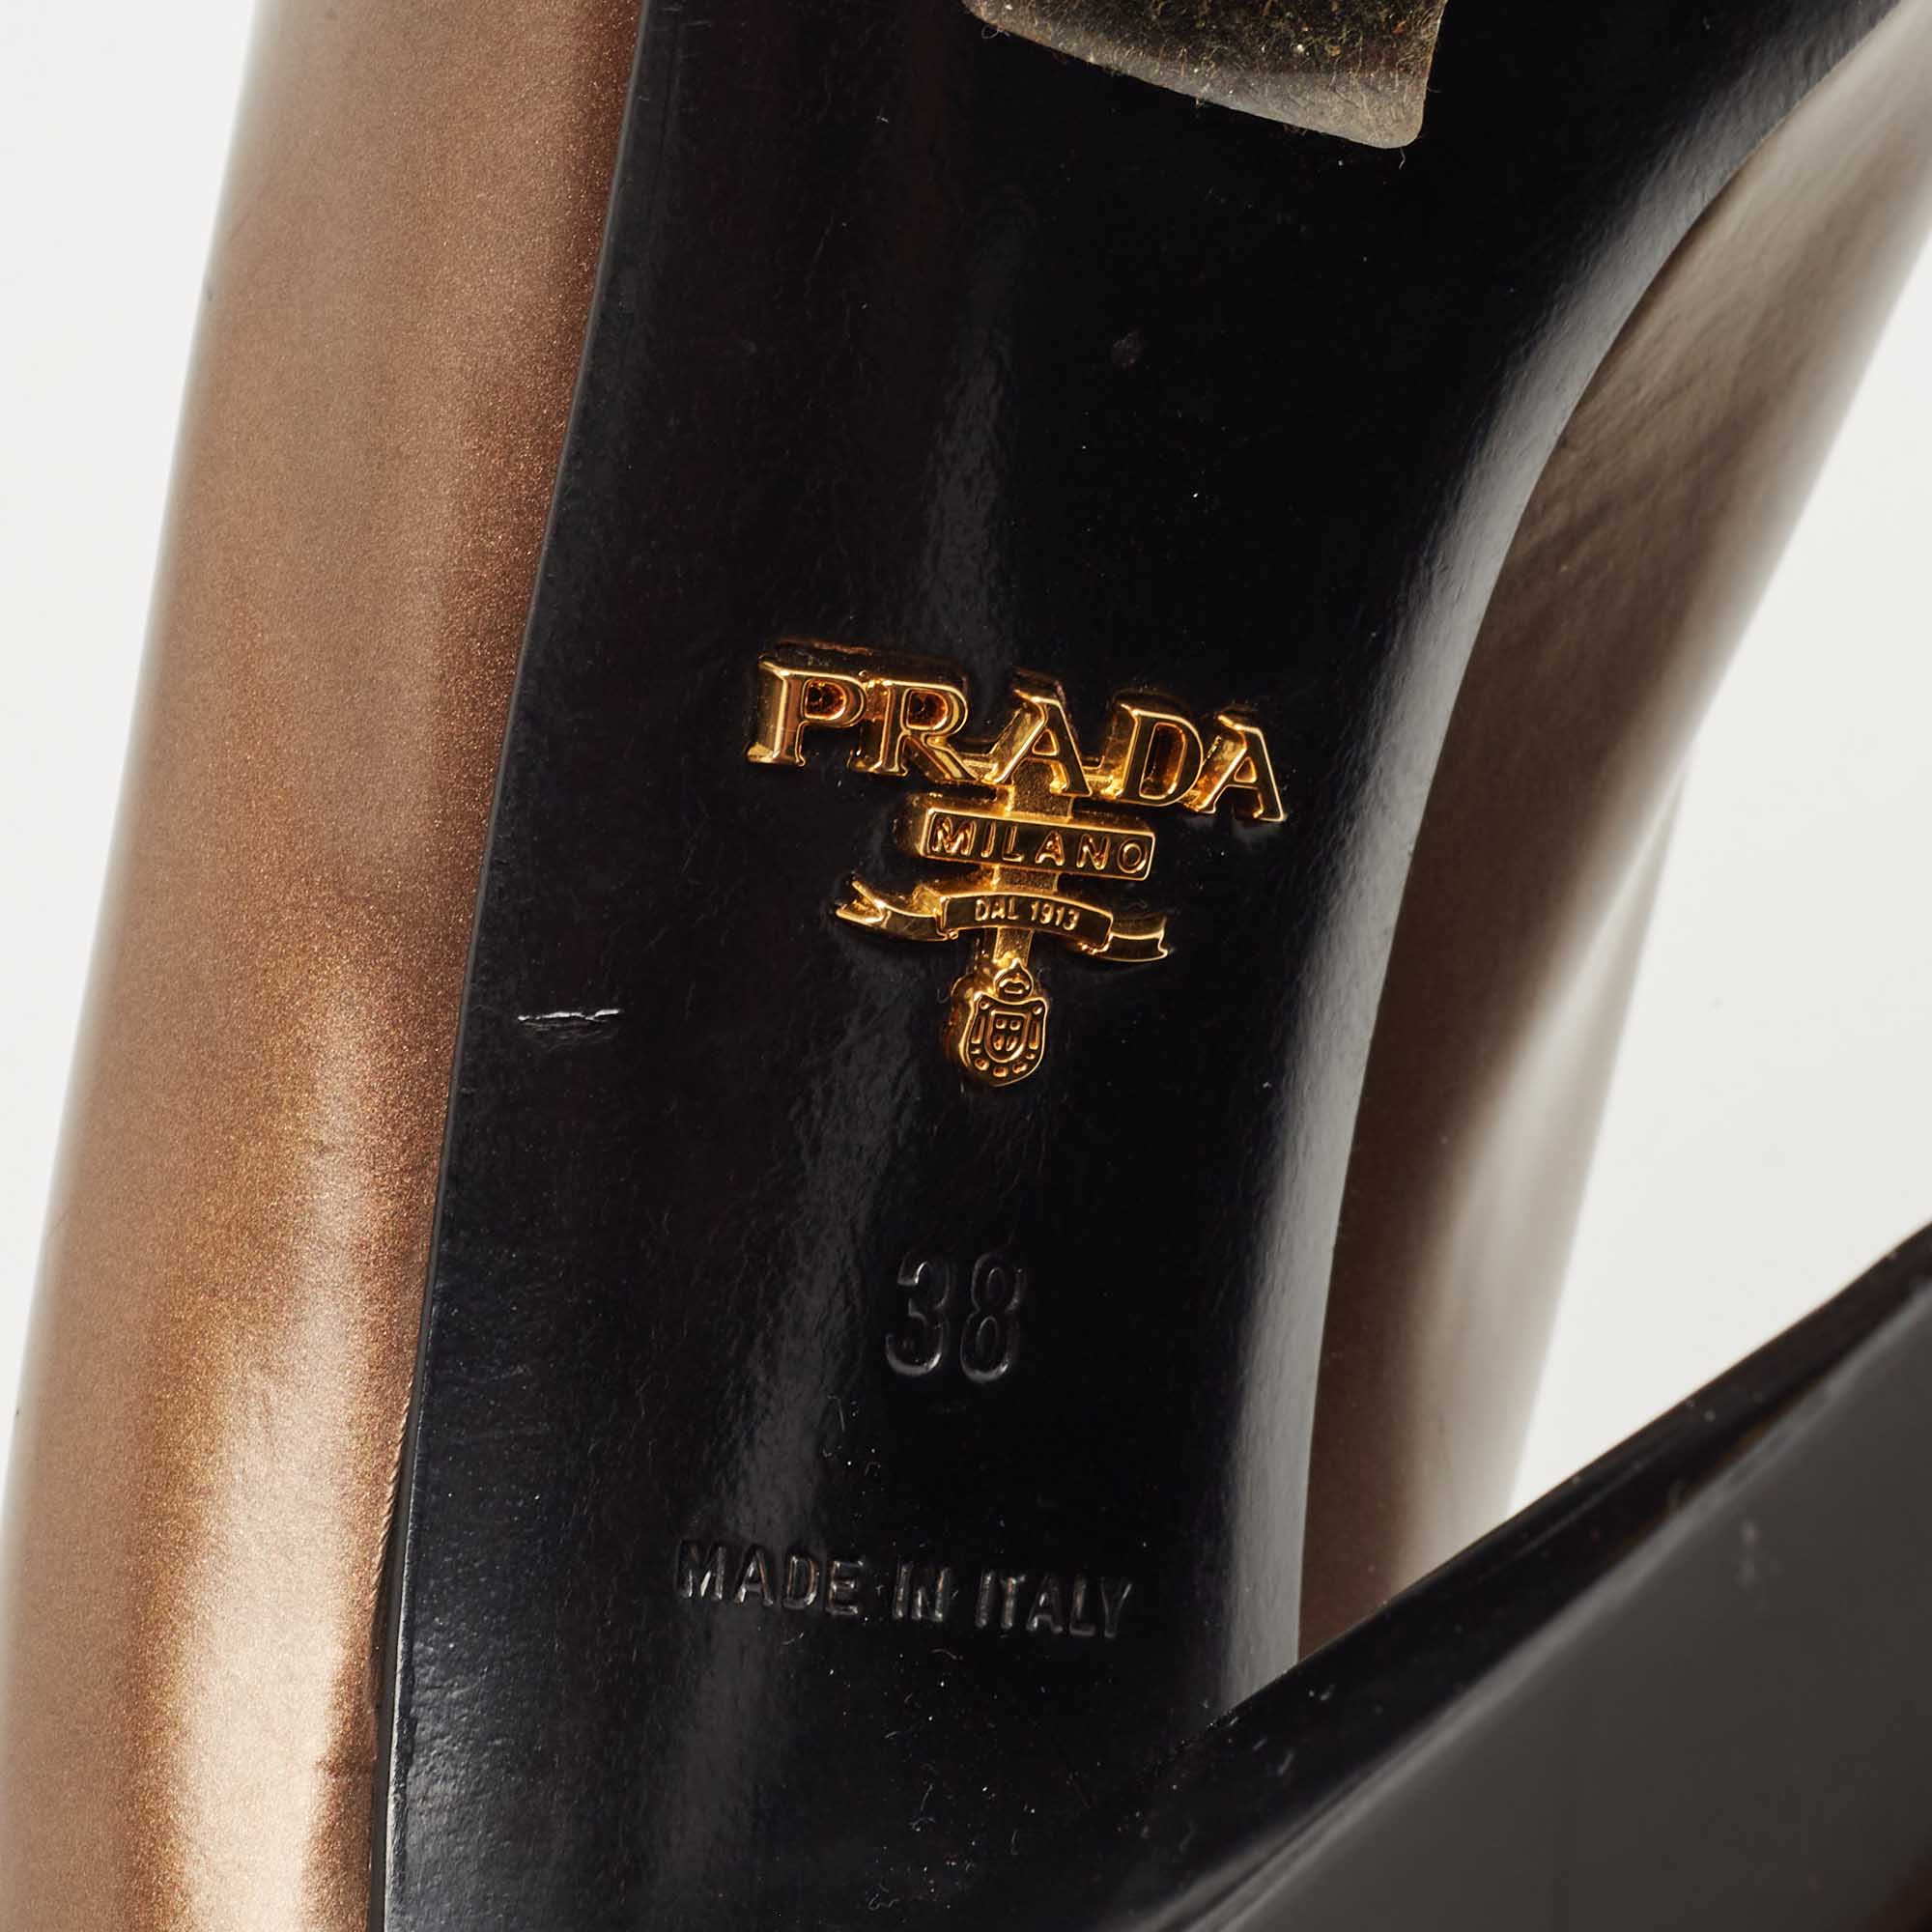 Prada Gold Leather Loafer Pumps Size 38